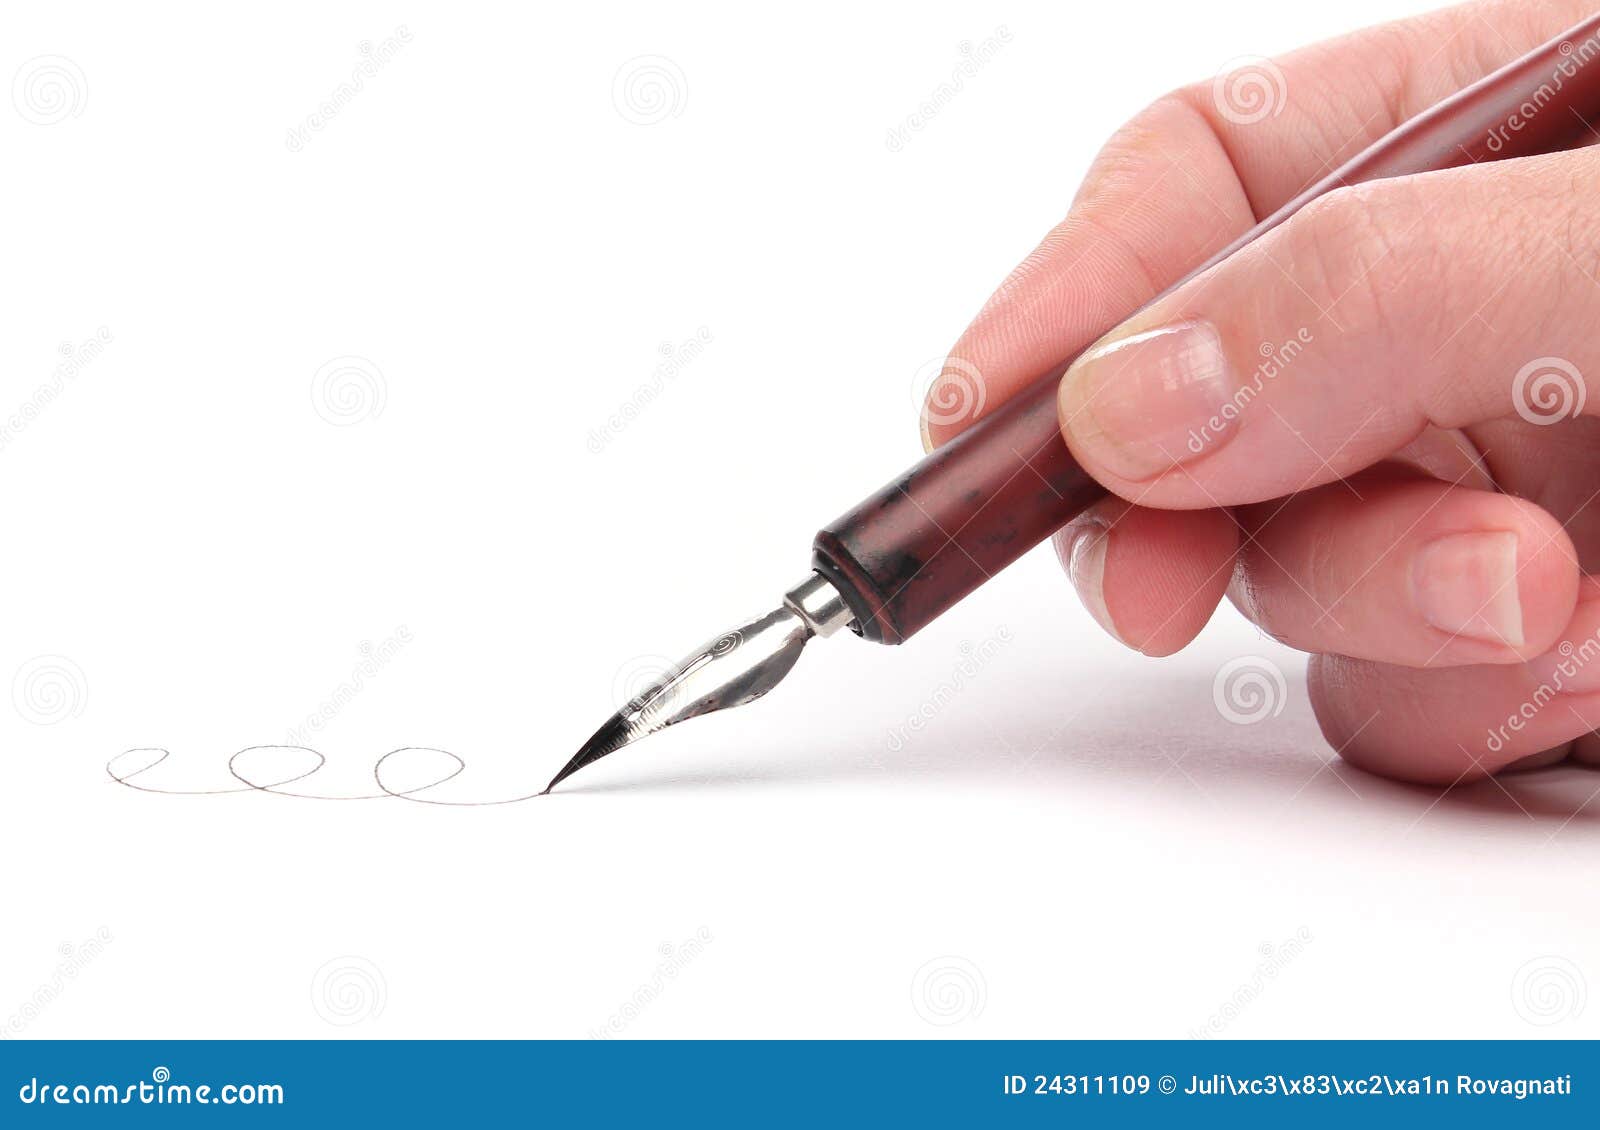 hand writing with a nib